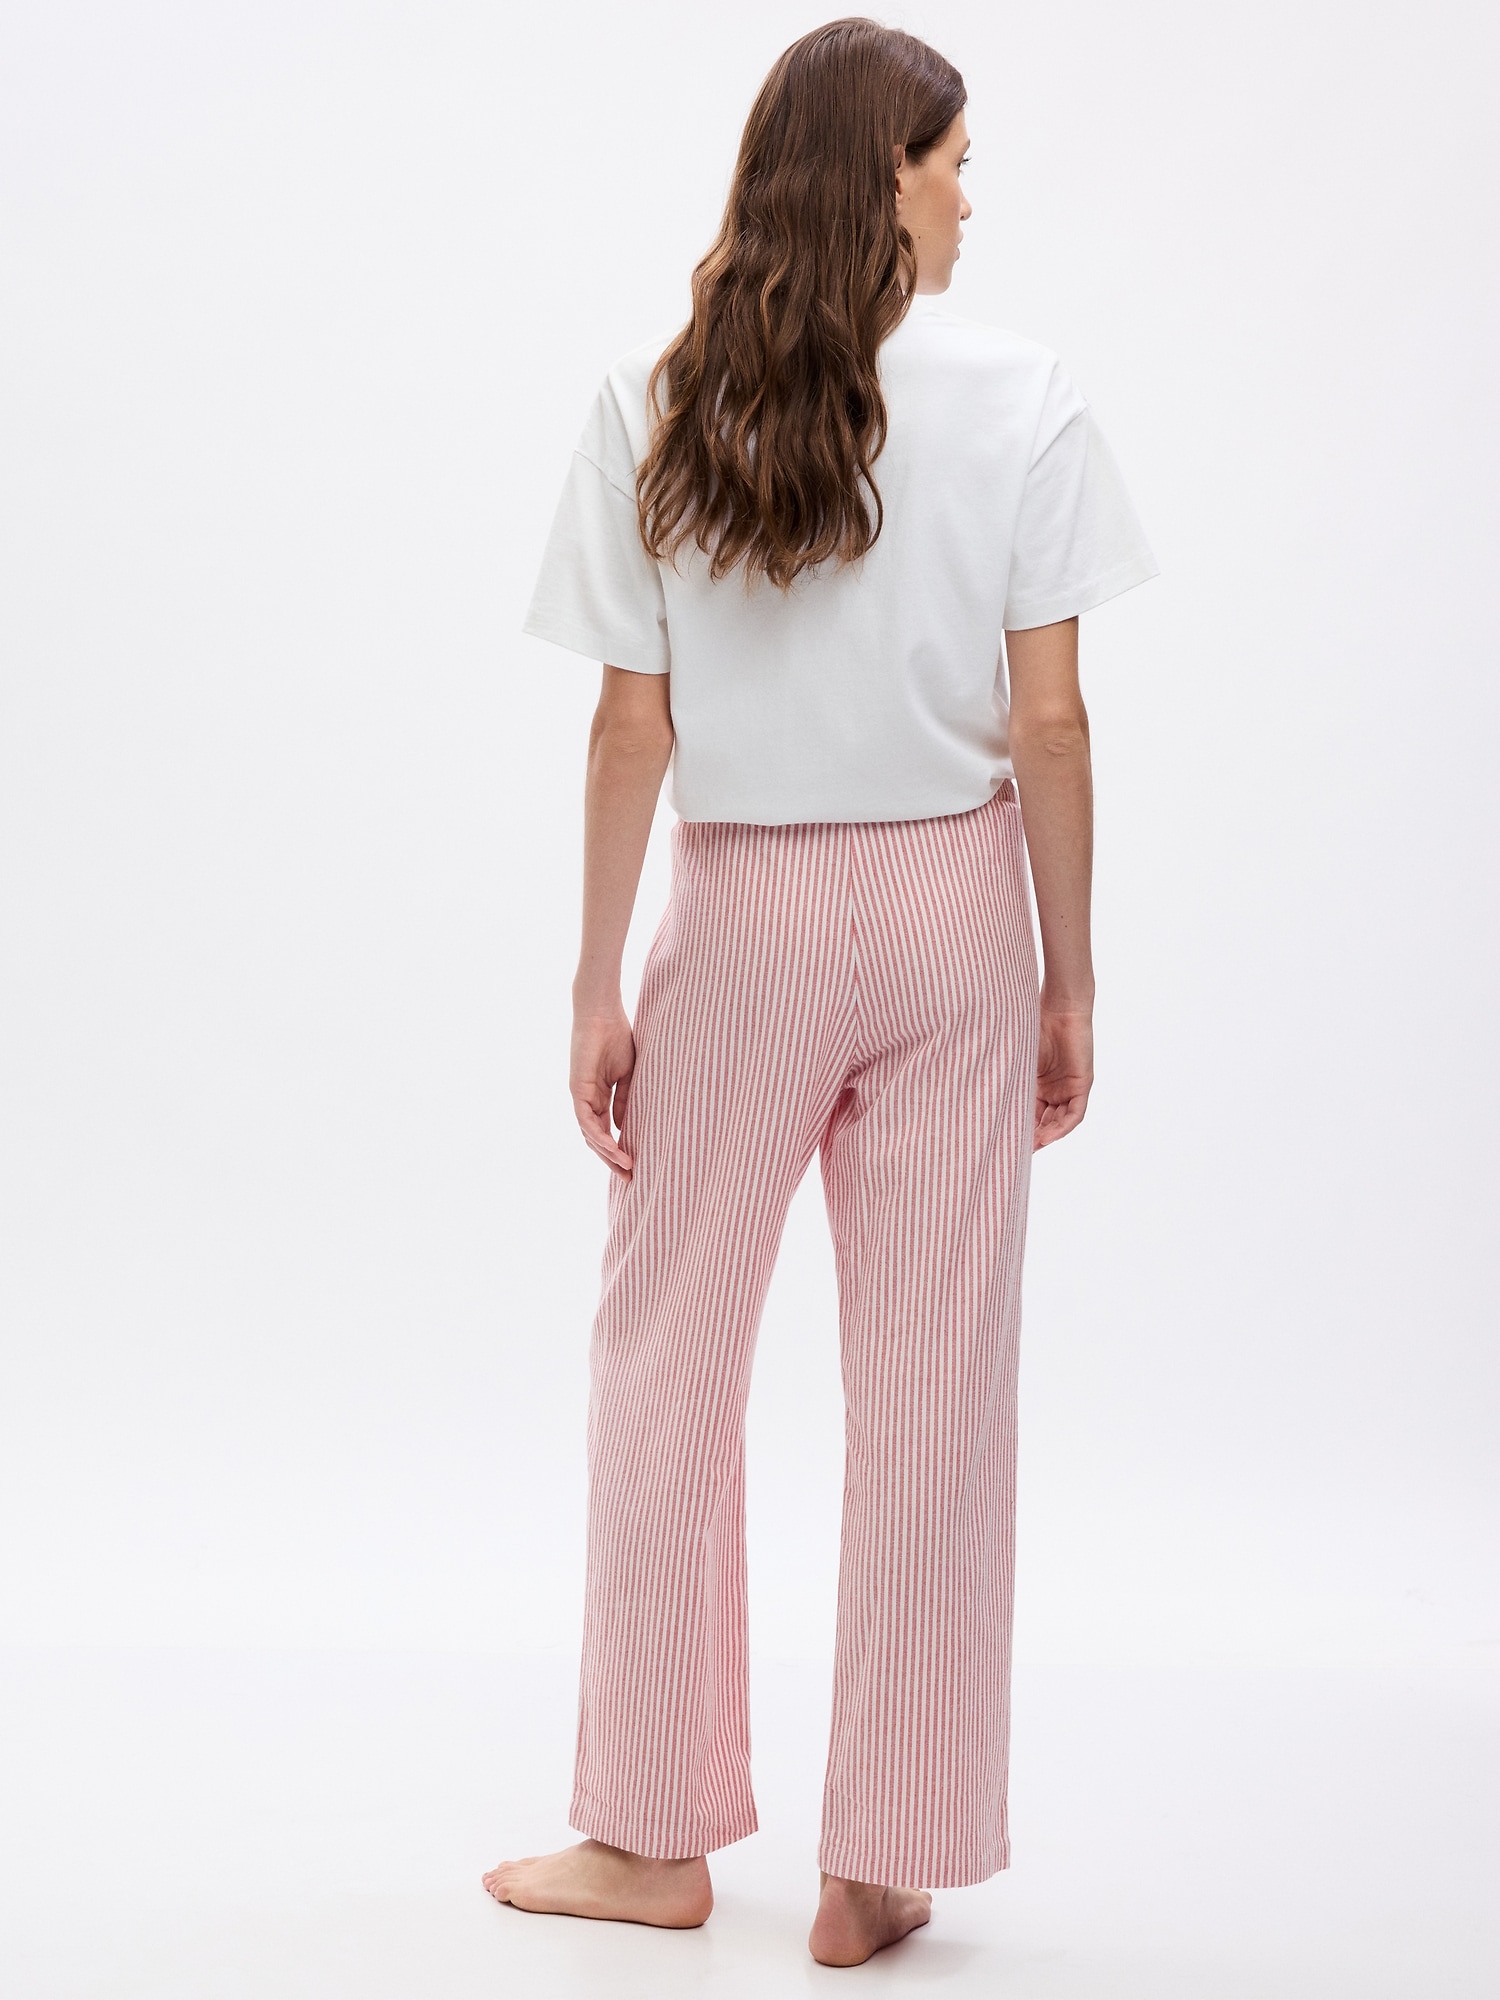 Women's Flannel Paw Pajama Pants, 100% Cotton